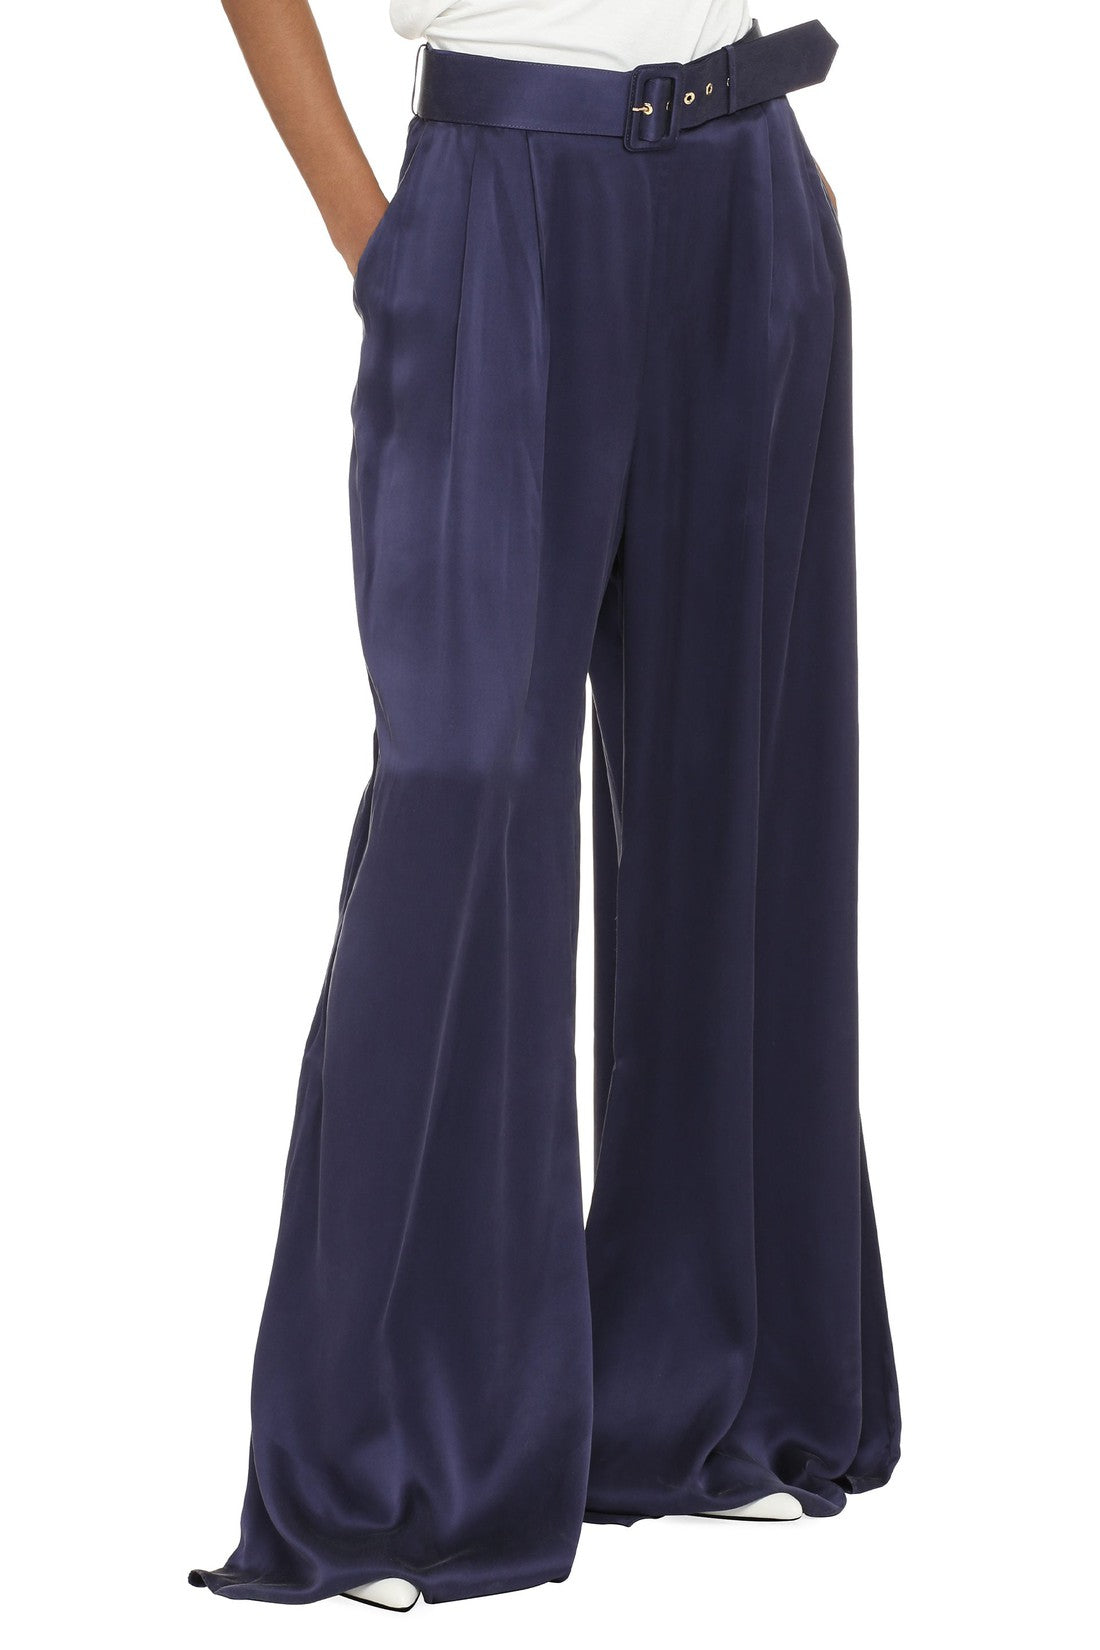 Zimmermann-OUTLET-SALE-Silk wide-leg trousers-ARCHIVIST